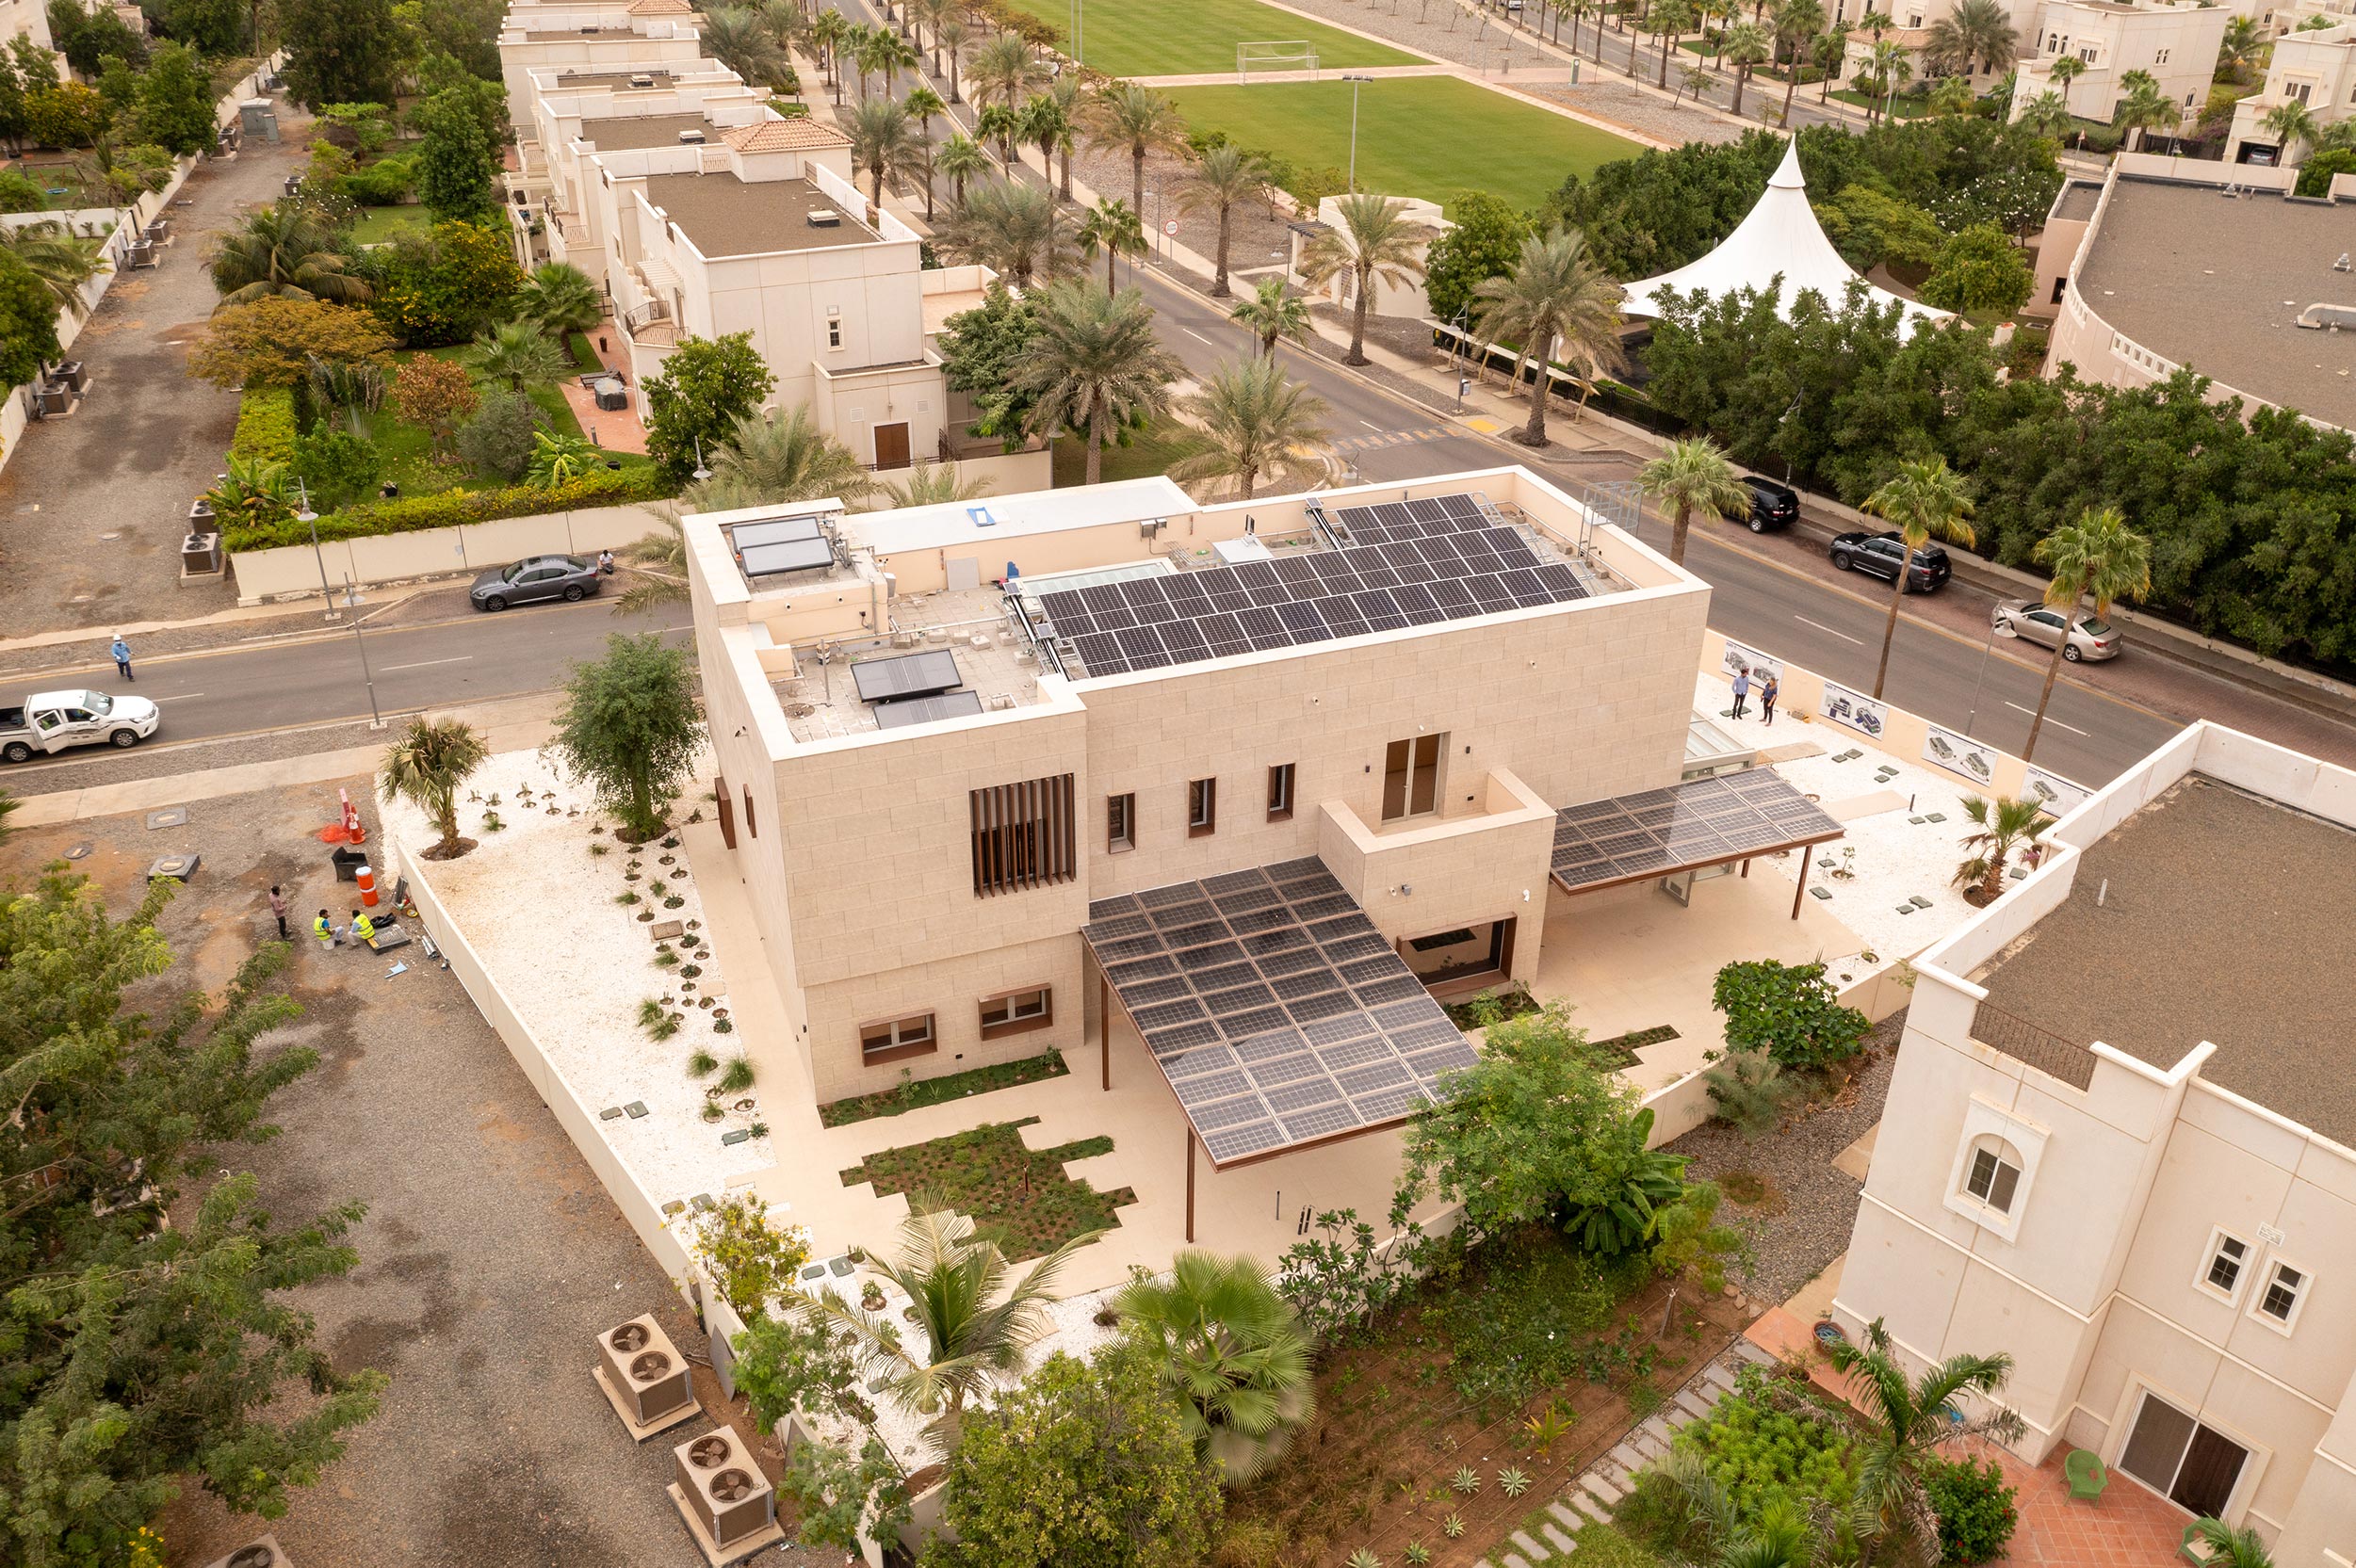 KAUST Smart Home achieves LEED Platinum ranking